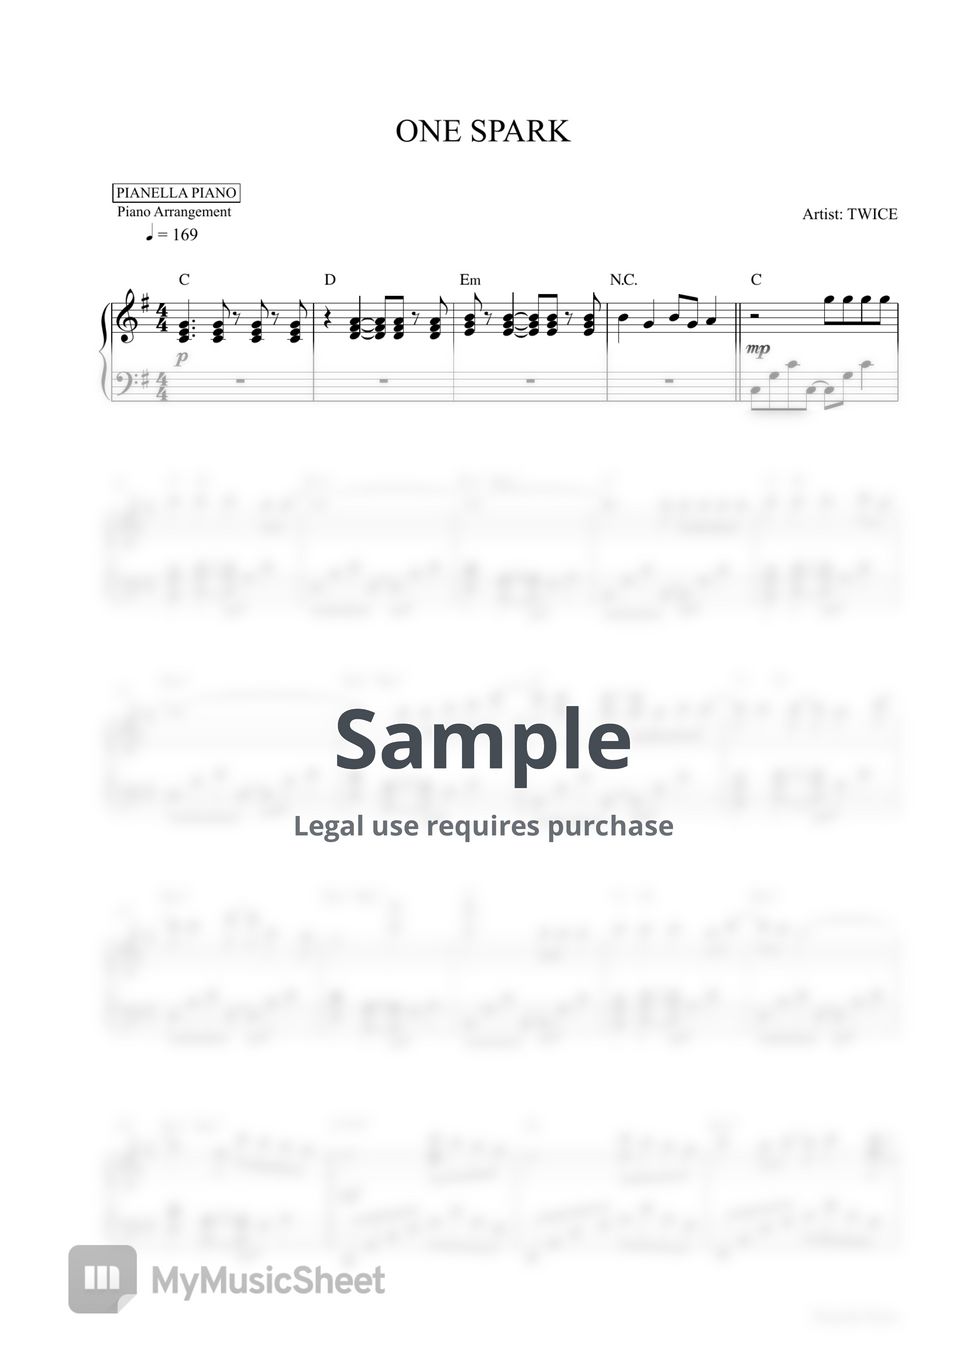 TWICE - ONE SPARK (Piano Sheet) by Pianella Piano